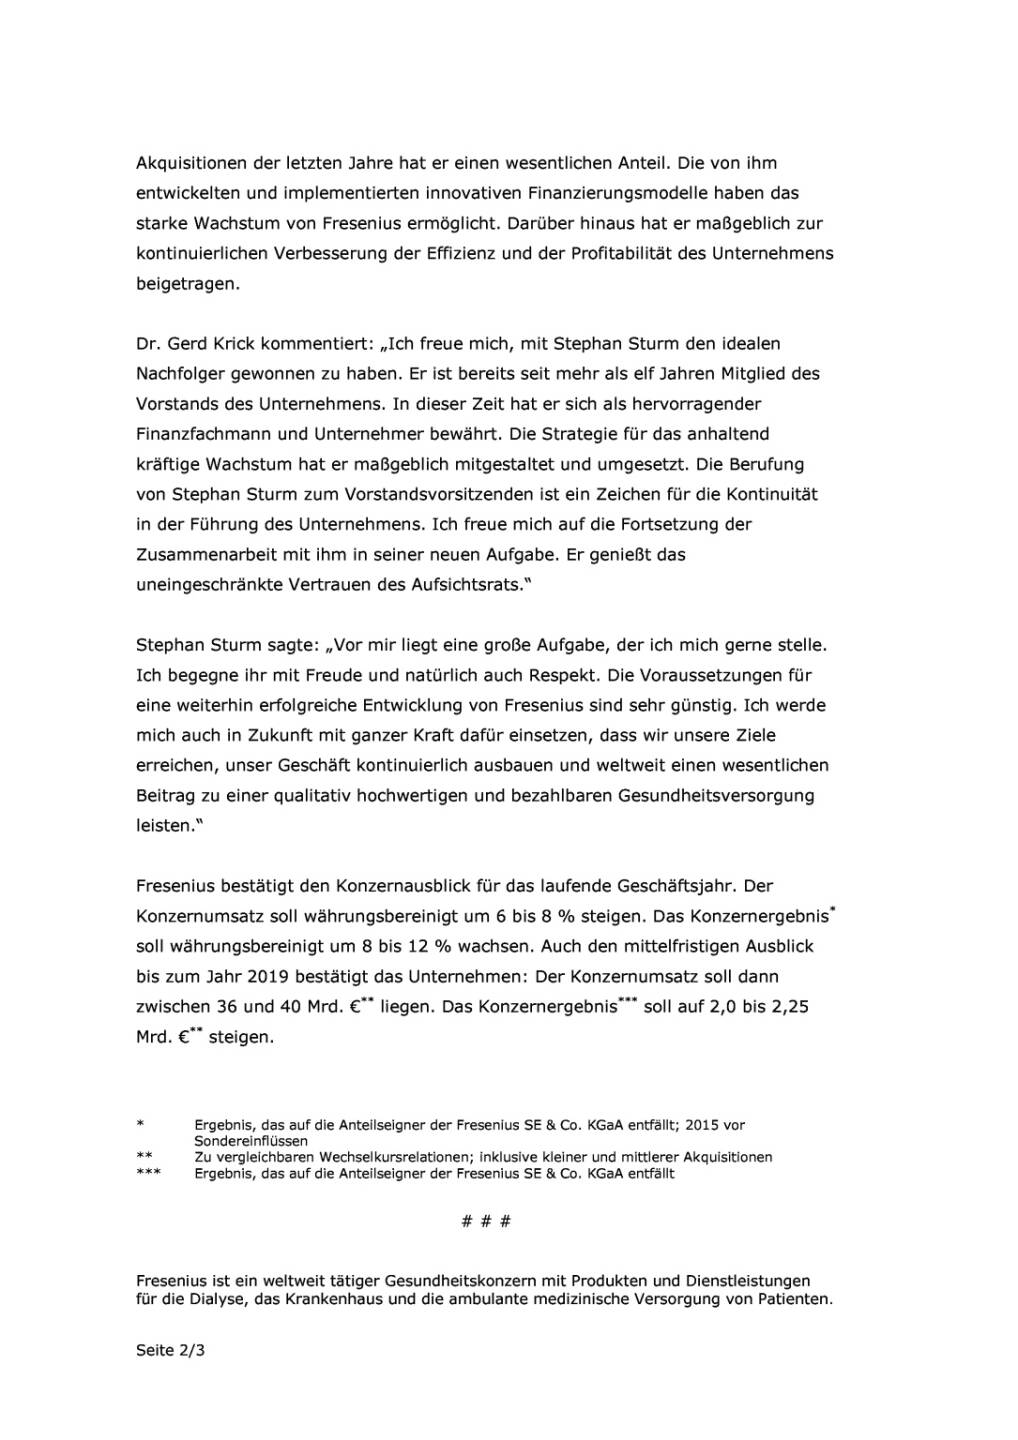 Stephan Sturm übernimmt Vorstandsvorsitz bei Fresenius, Seite 2/3, komplettes Dokument unter http://boerse-social.com/static/uploads/file_1279_stephan_sturm_übernimmt_vorstandsvorsitz_bei_fresenius.pdf